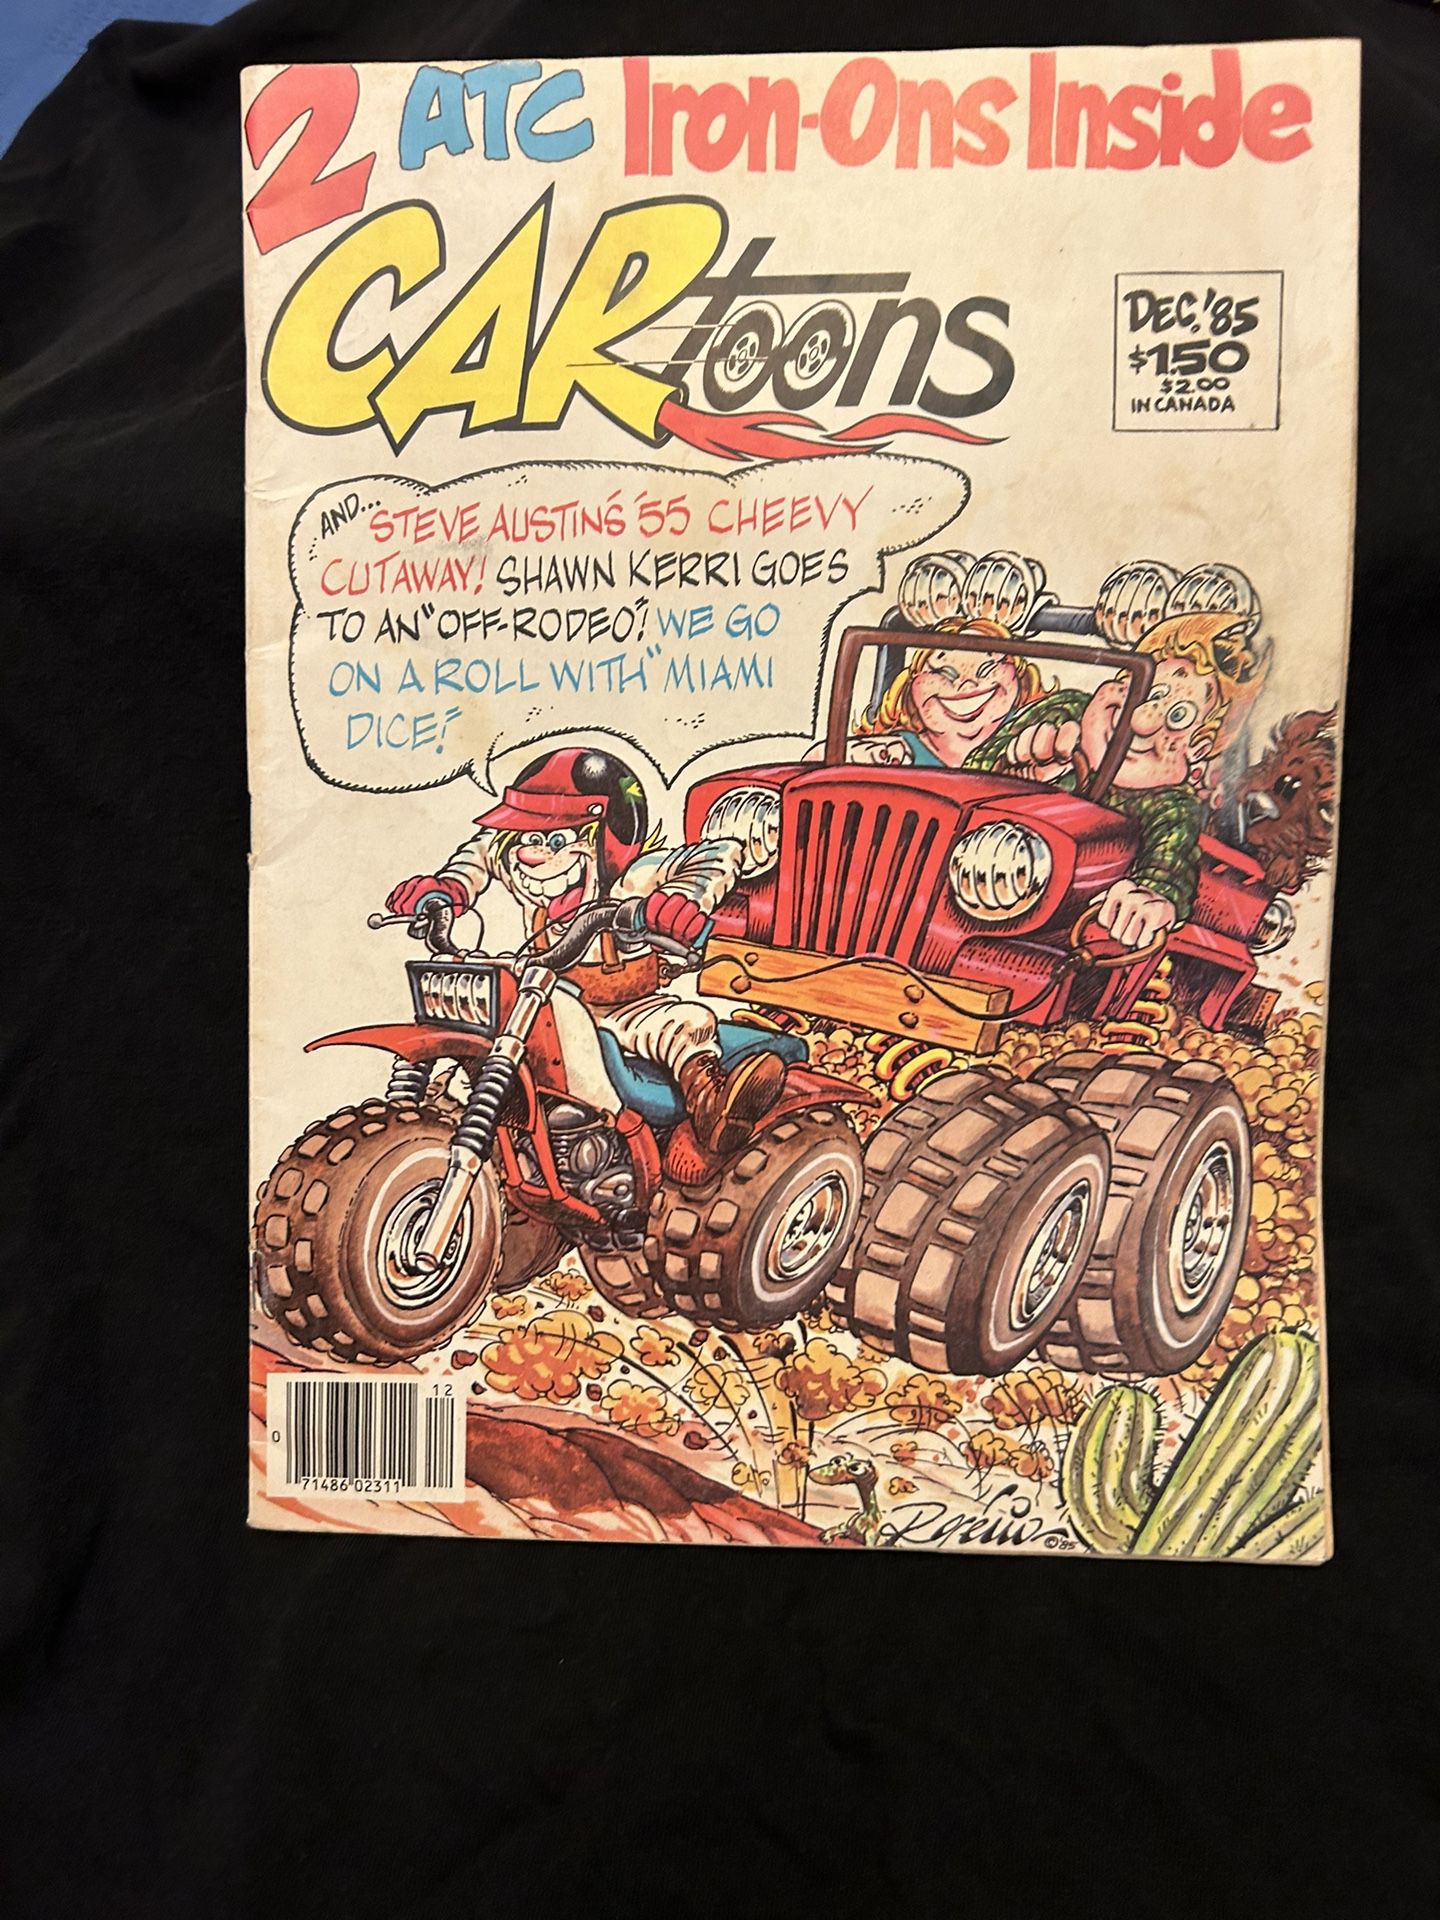 Cartoons Magazine - December 1985